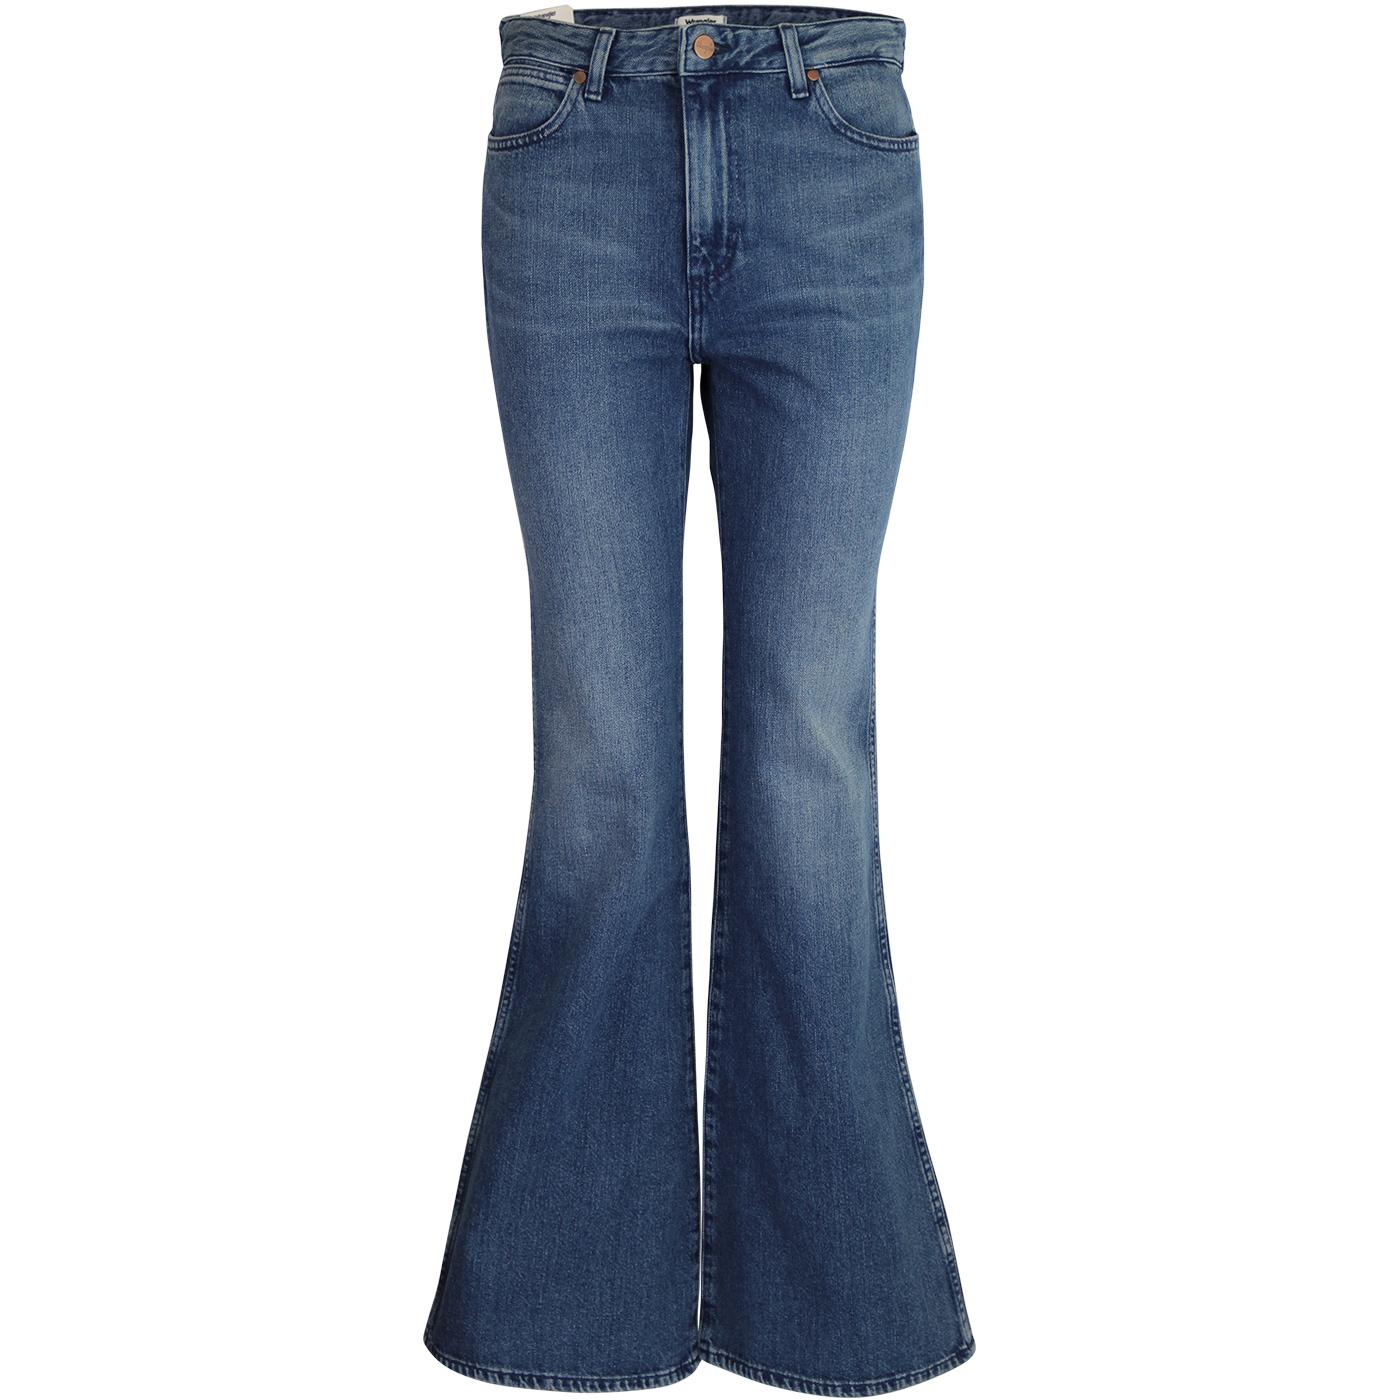 Wrangler 34x27 vintage flared bootcut 70s denim jeans